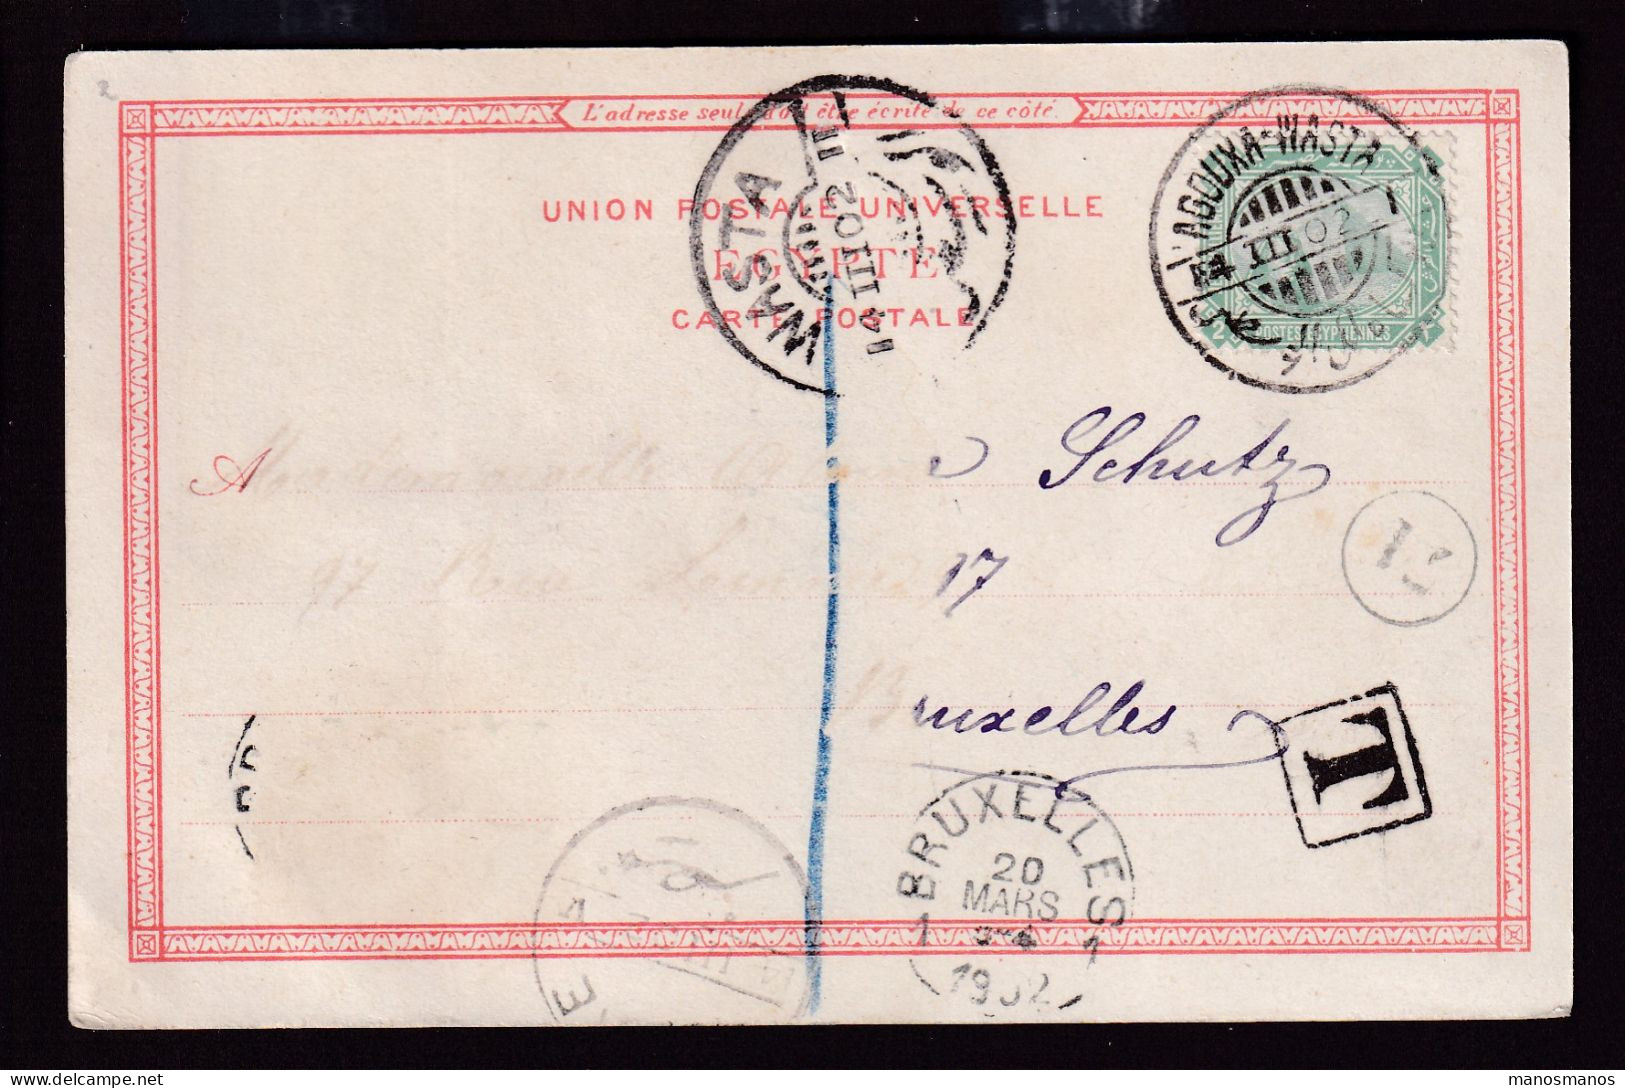 377/31 -- EGYPT ABOUXA-WASTA TPO - Viewcard Cancelled 1902 To Belgium - 1866-1914 Khedivate Of Egypt